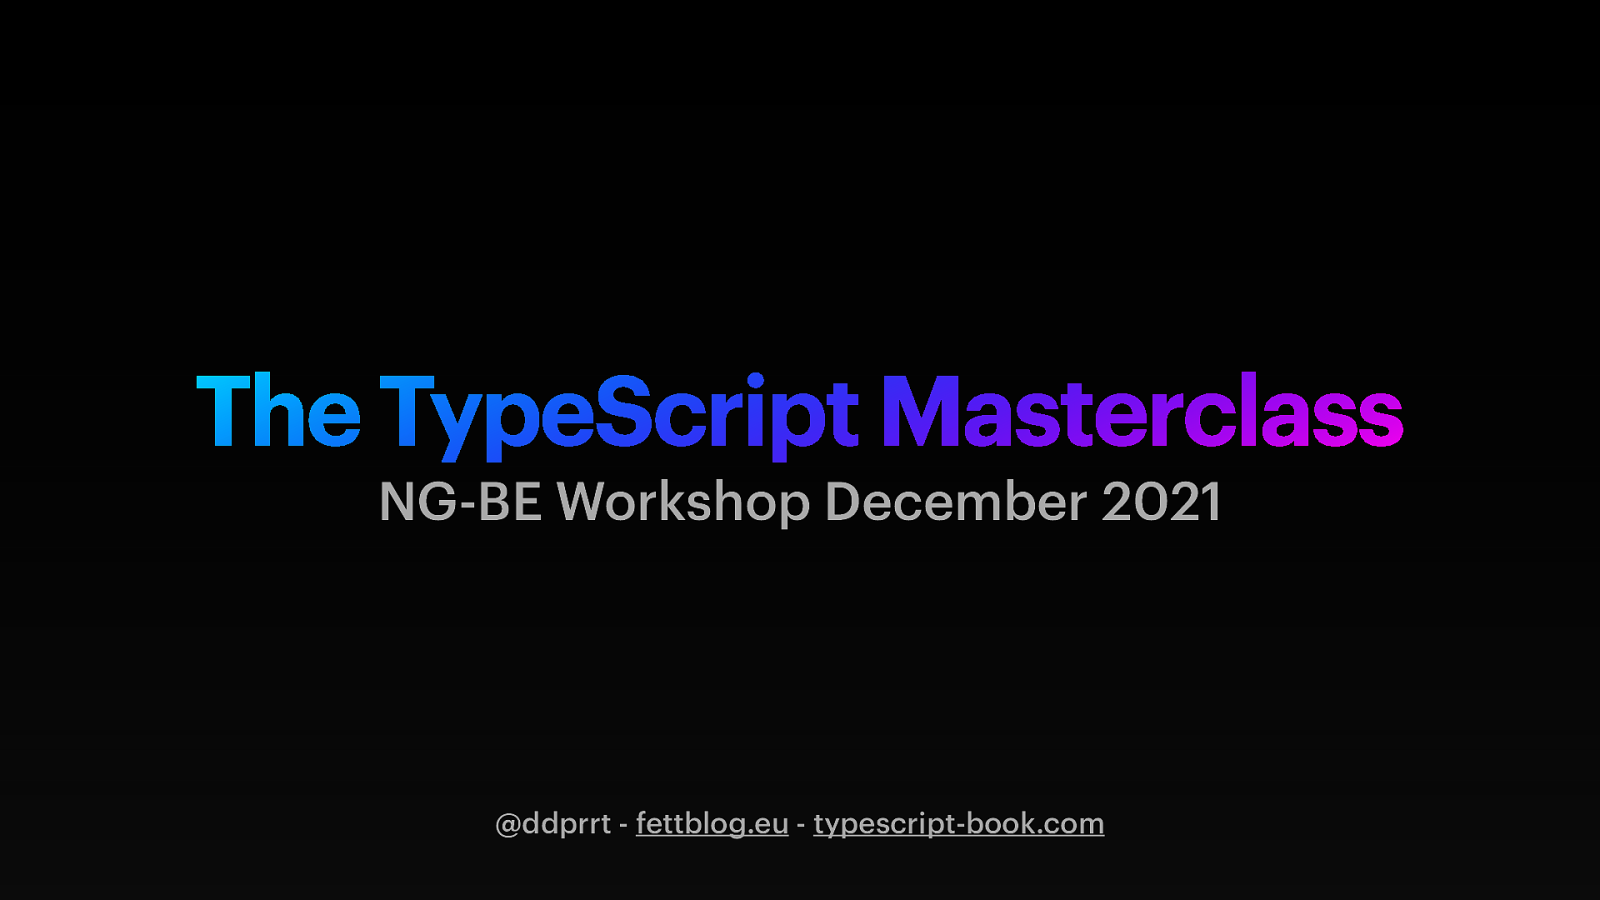 The TypeScript Masterclass